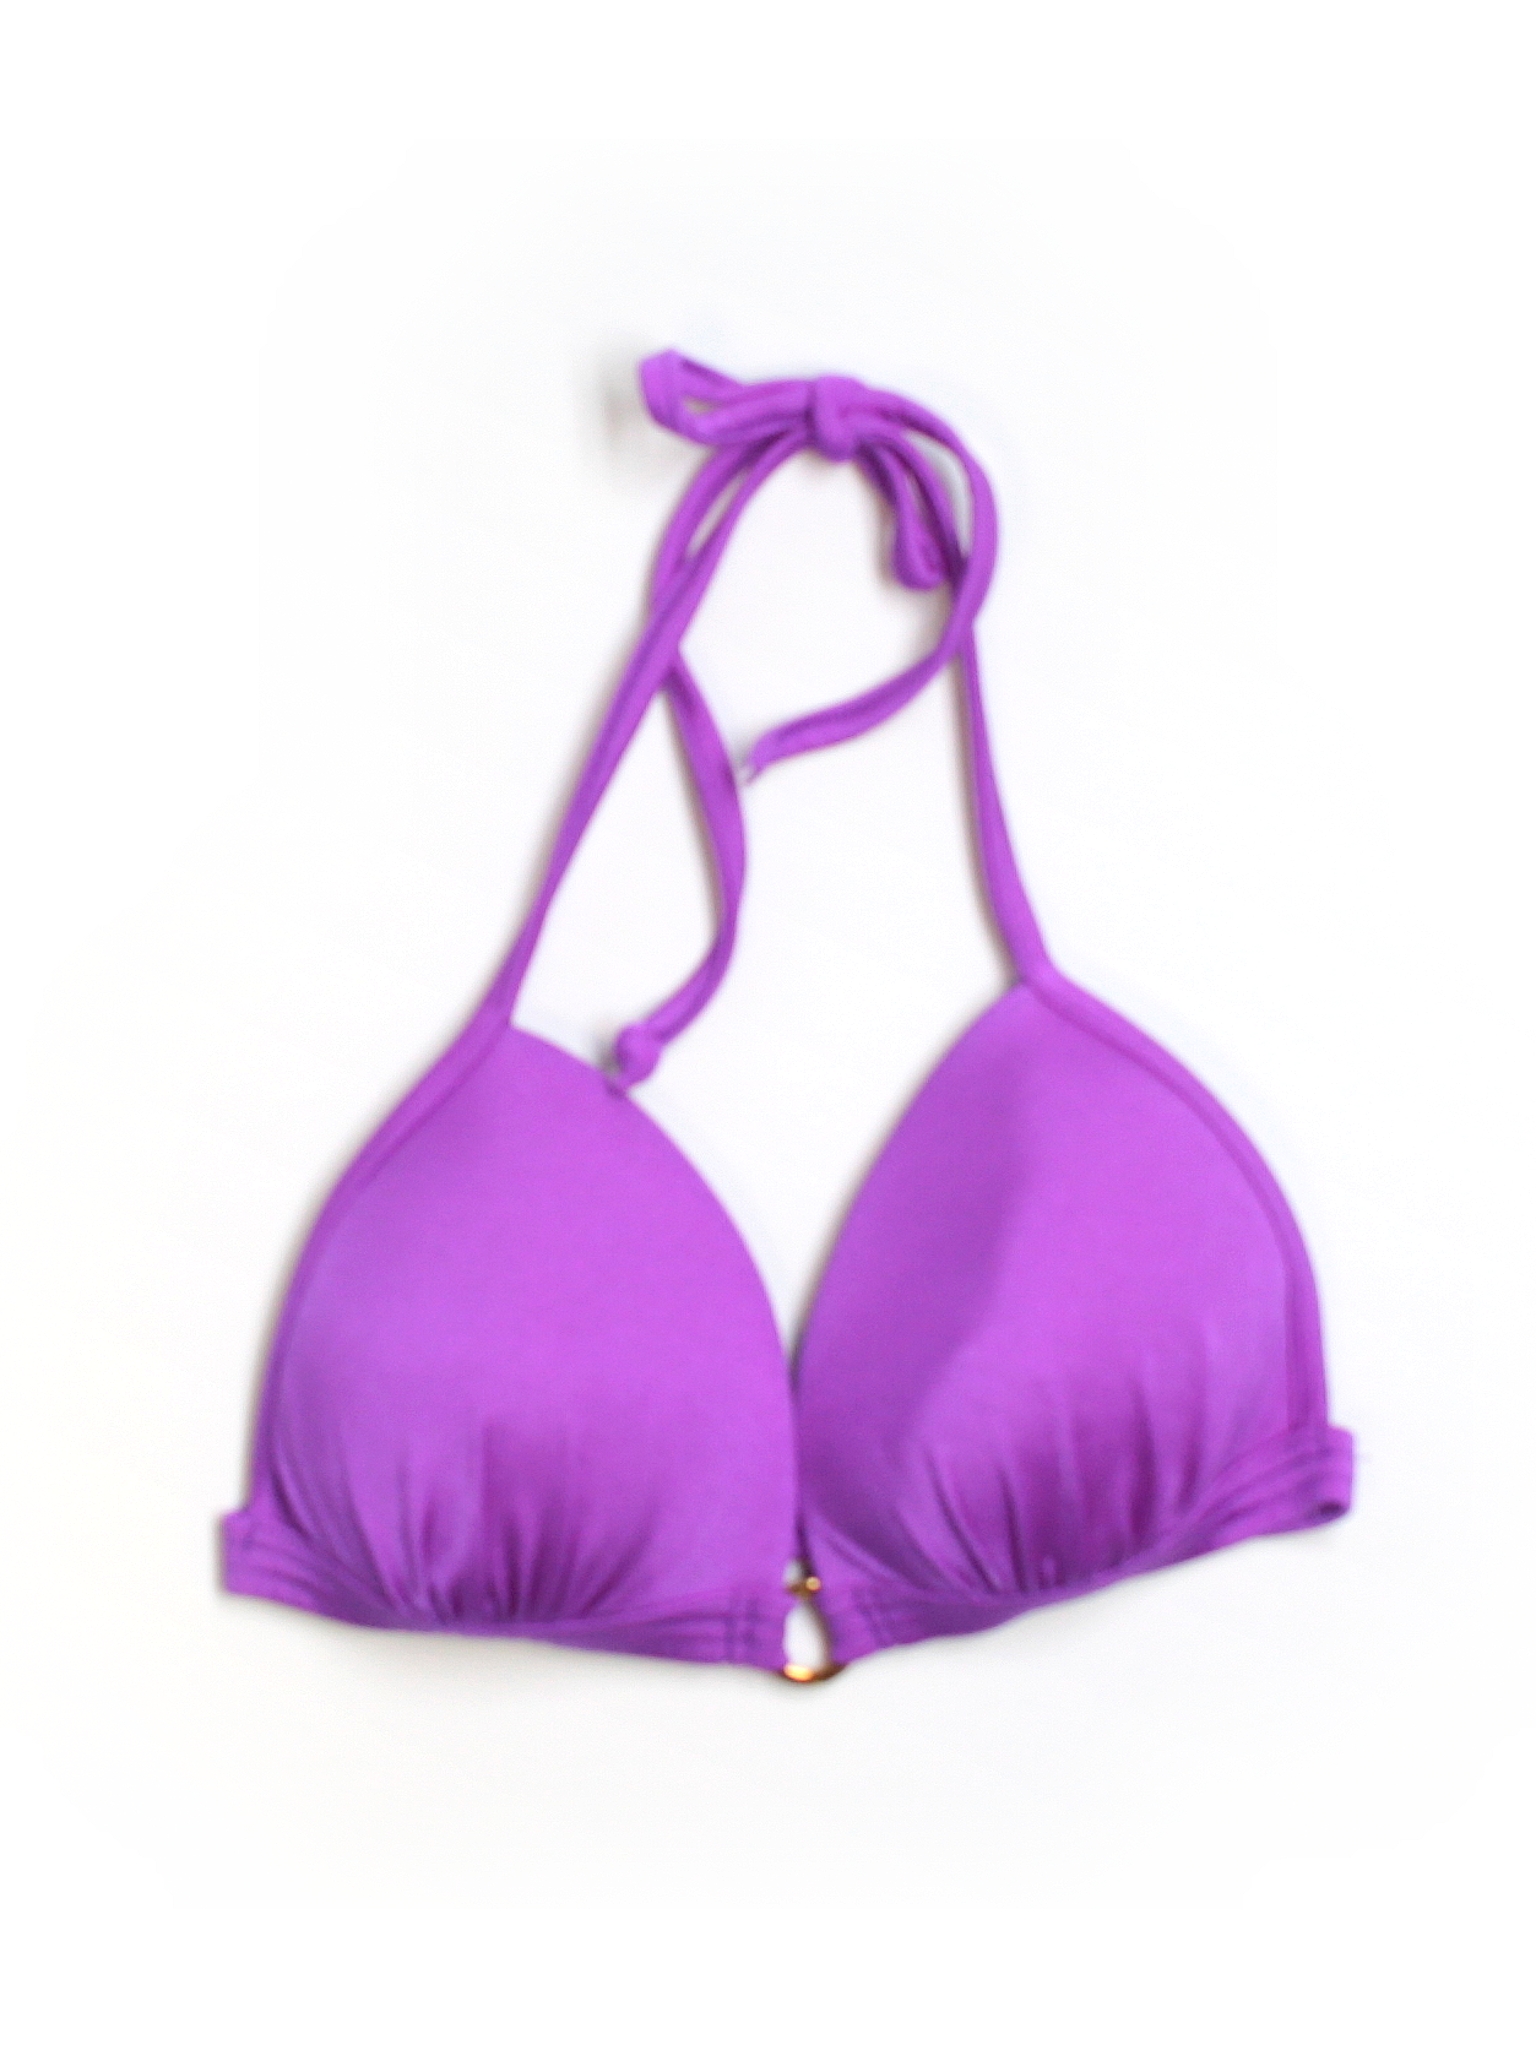 Venus Solid Purple Swimsuit Top Size S - 61% off | thredUP